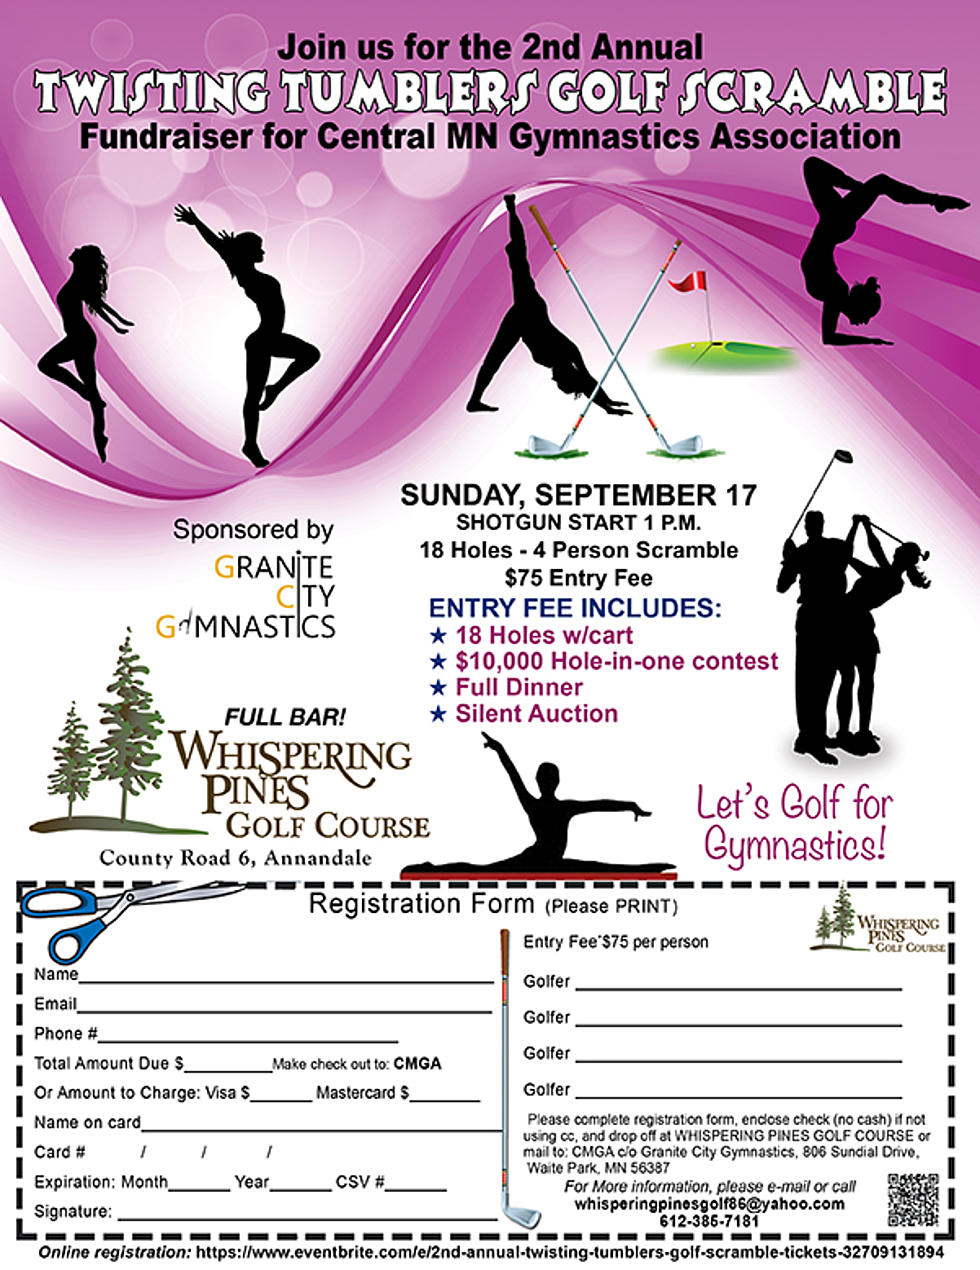 Golf for the Central Minnesota Gymnastics Association on Sept. 17th!